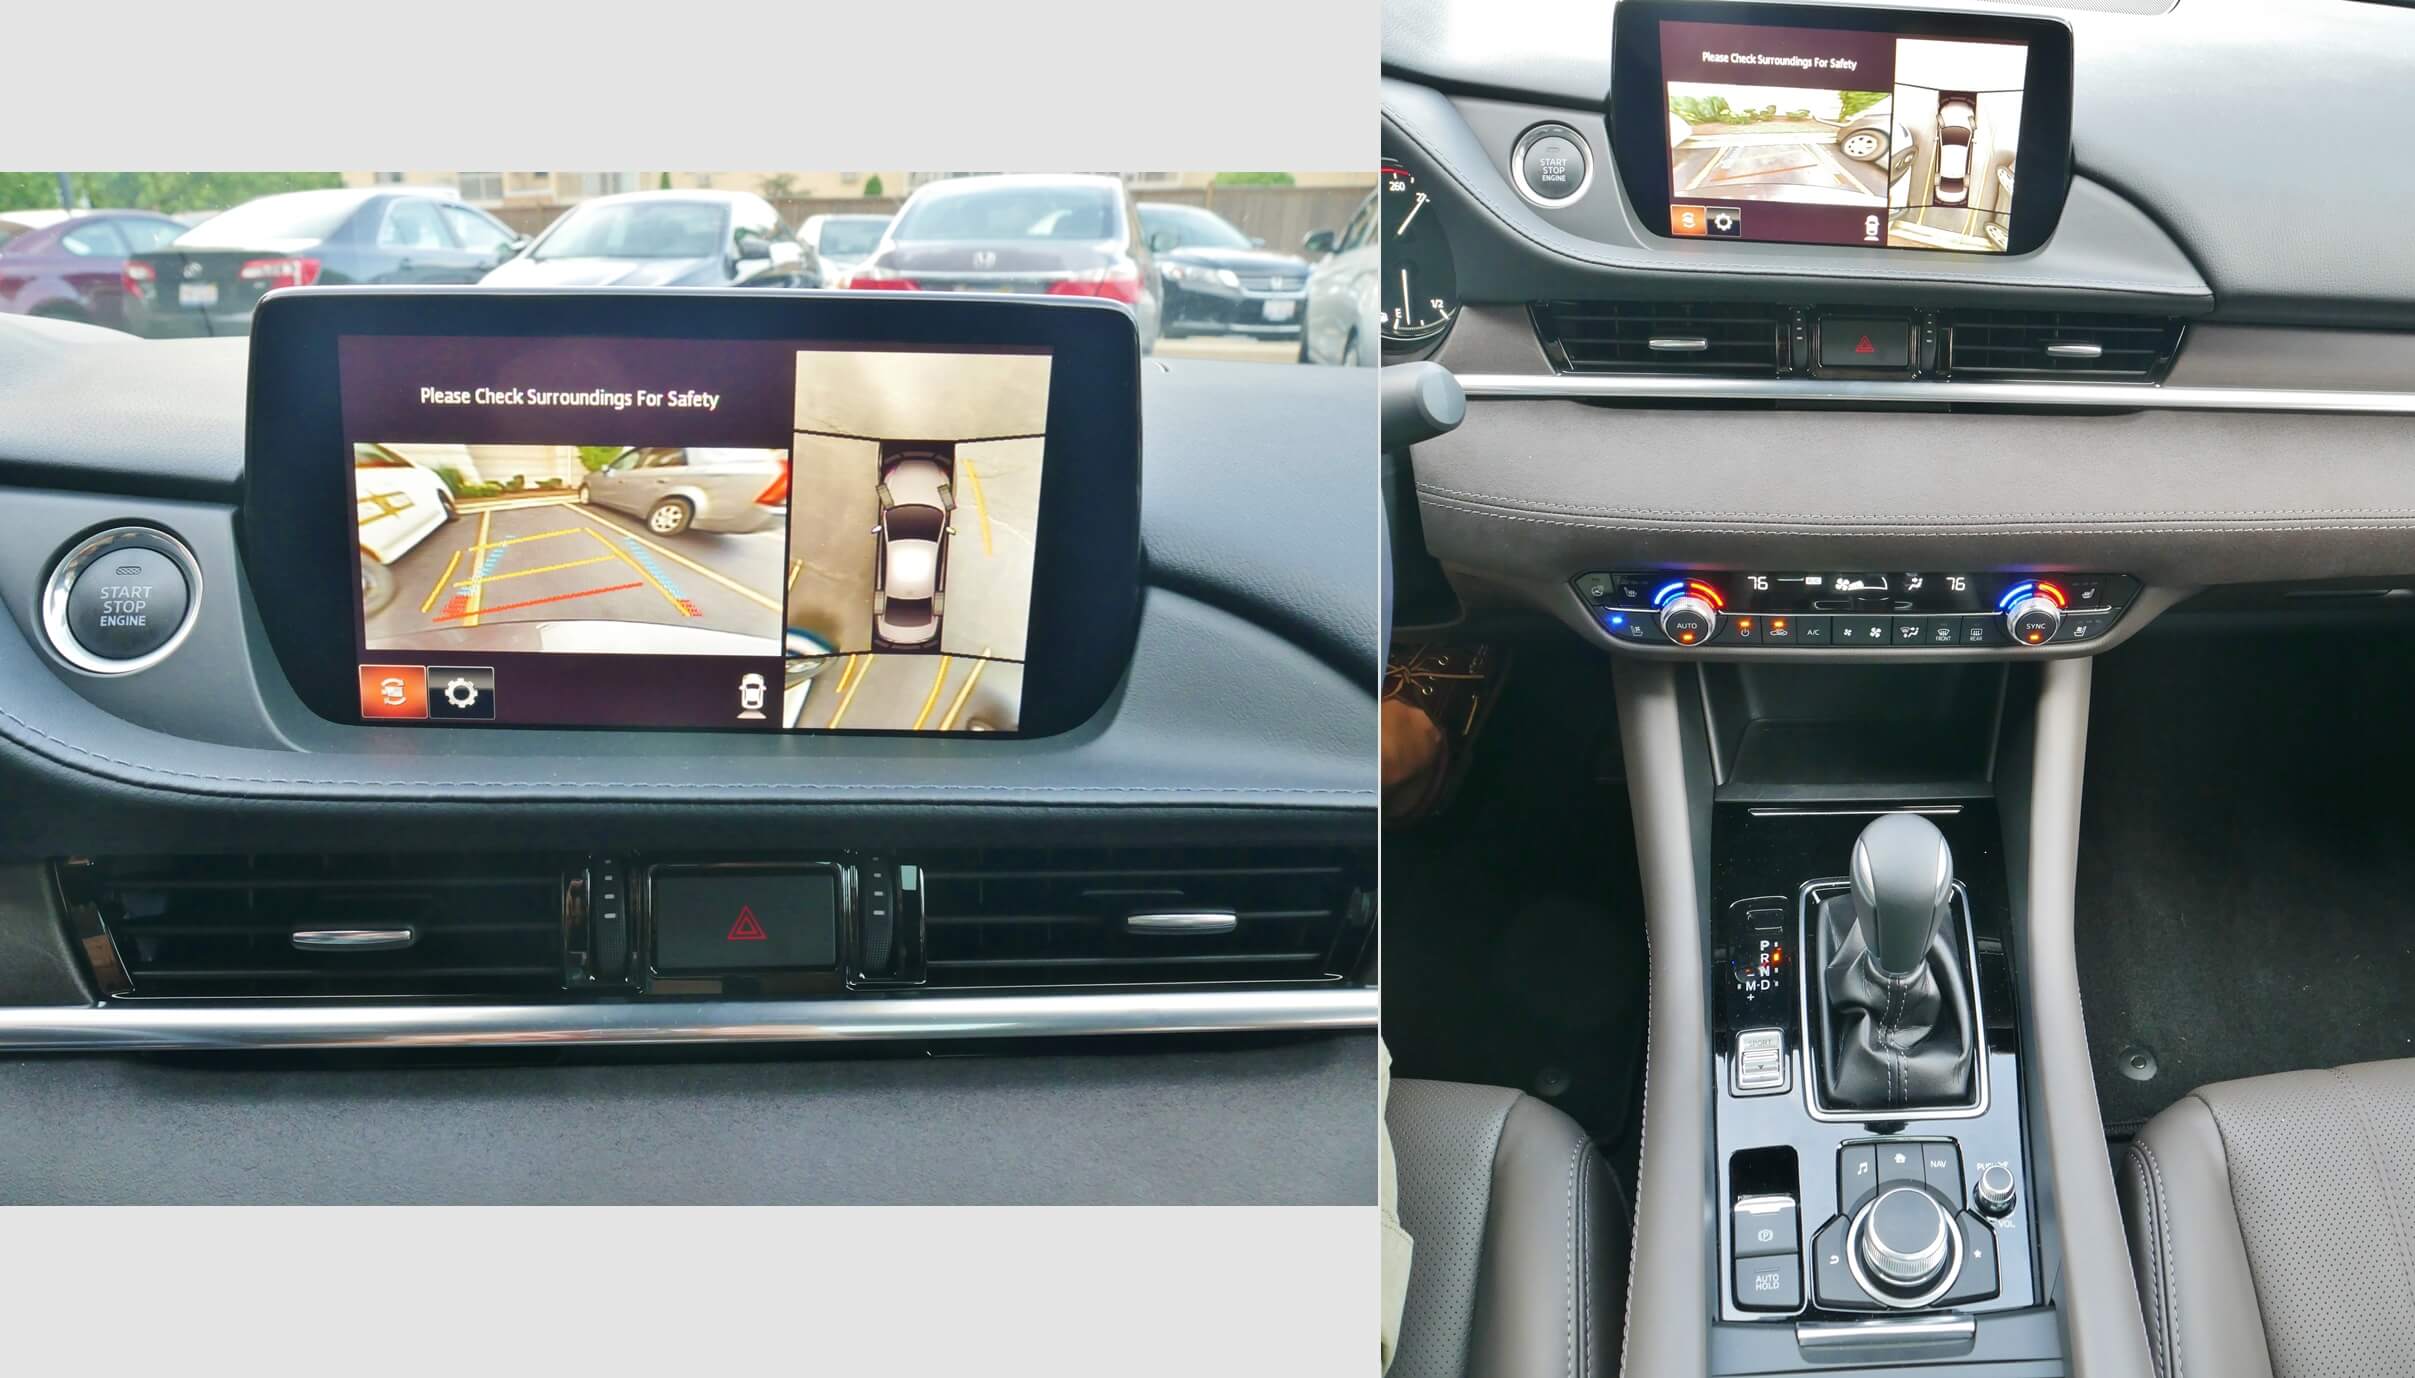 2018 Mazda6 Signature 2.5T: 360 degree bird's eye camera view aids rear and forward parking